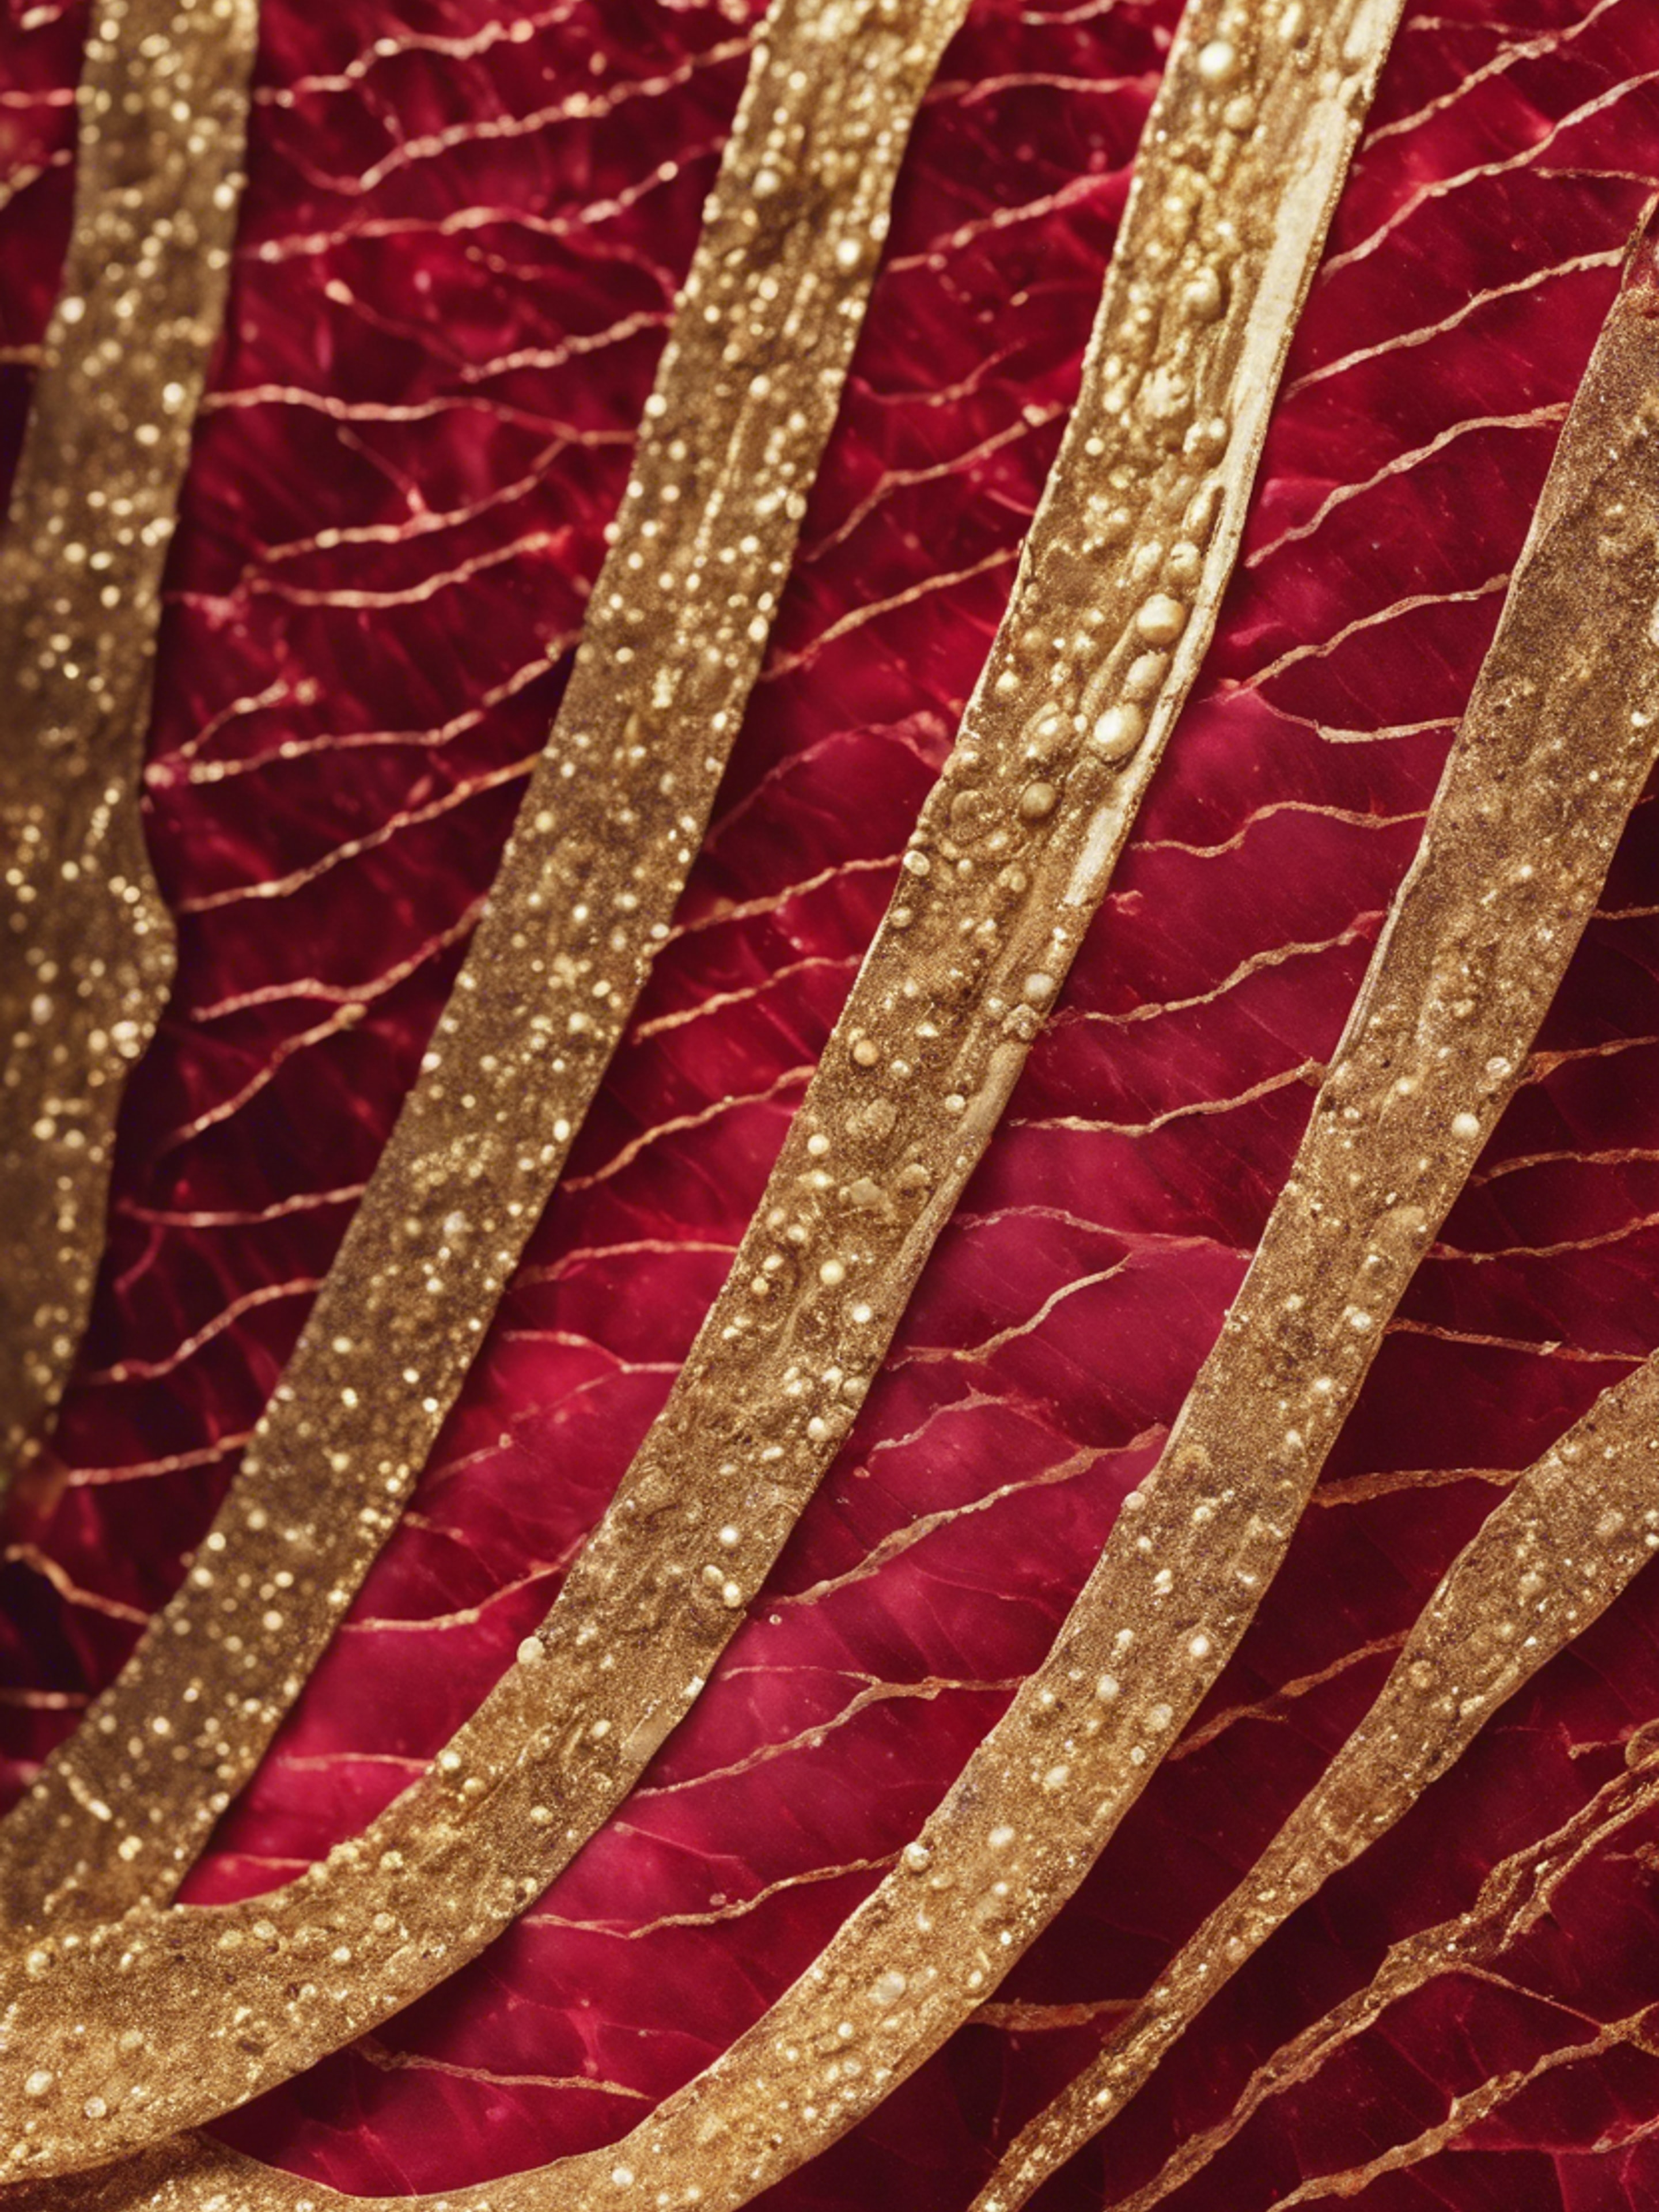 A rich mosaic of cerise red velvet interlaced with veins of shimmering gold. Wallpaper[dcbd46e138d24d6da9a0]